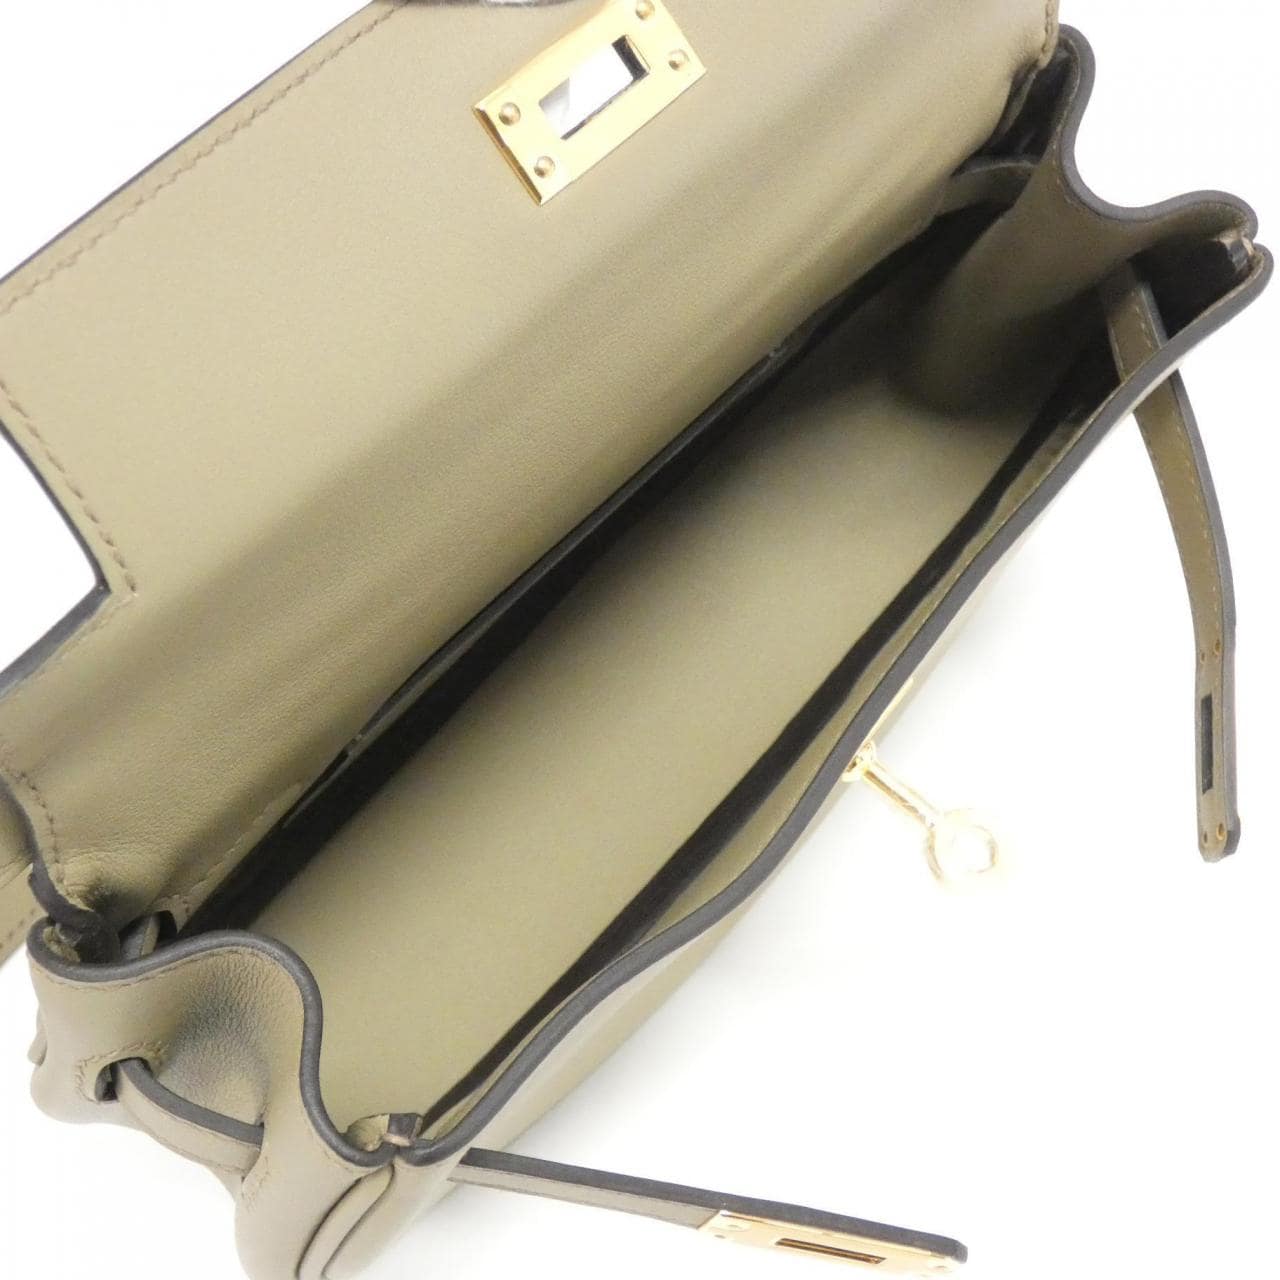 [Unused items] HERMES KELLY MOVE 084552CC shoulder bag